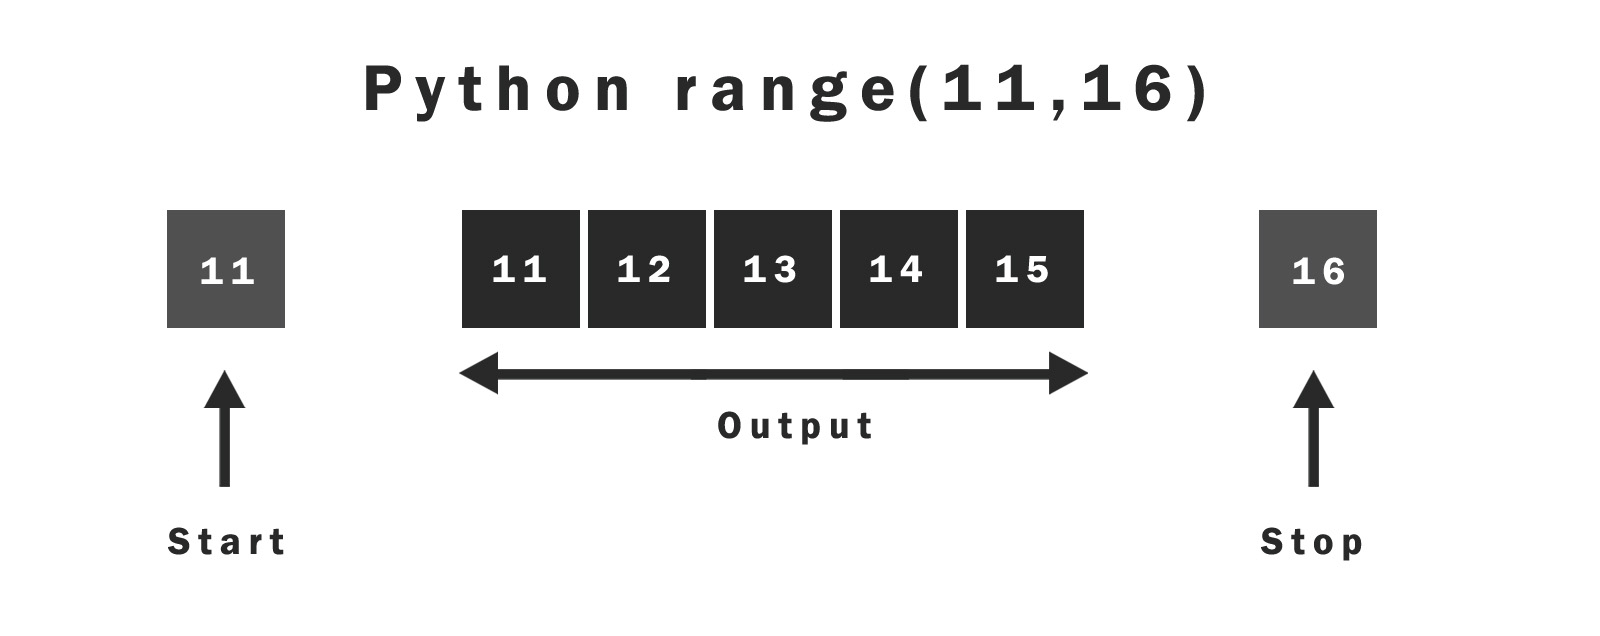 Python range(start, stop)